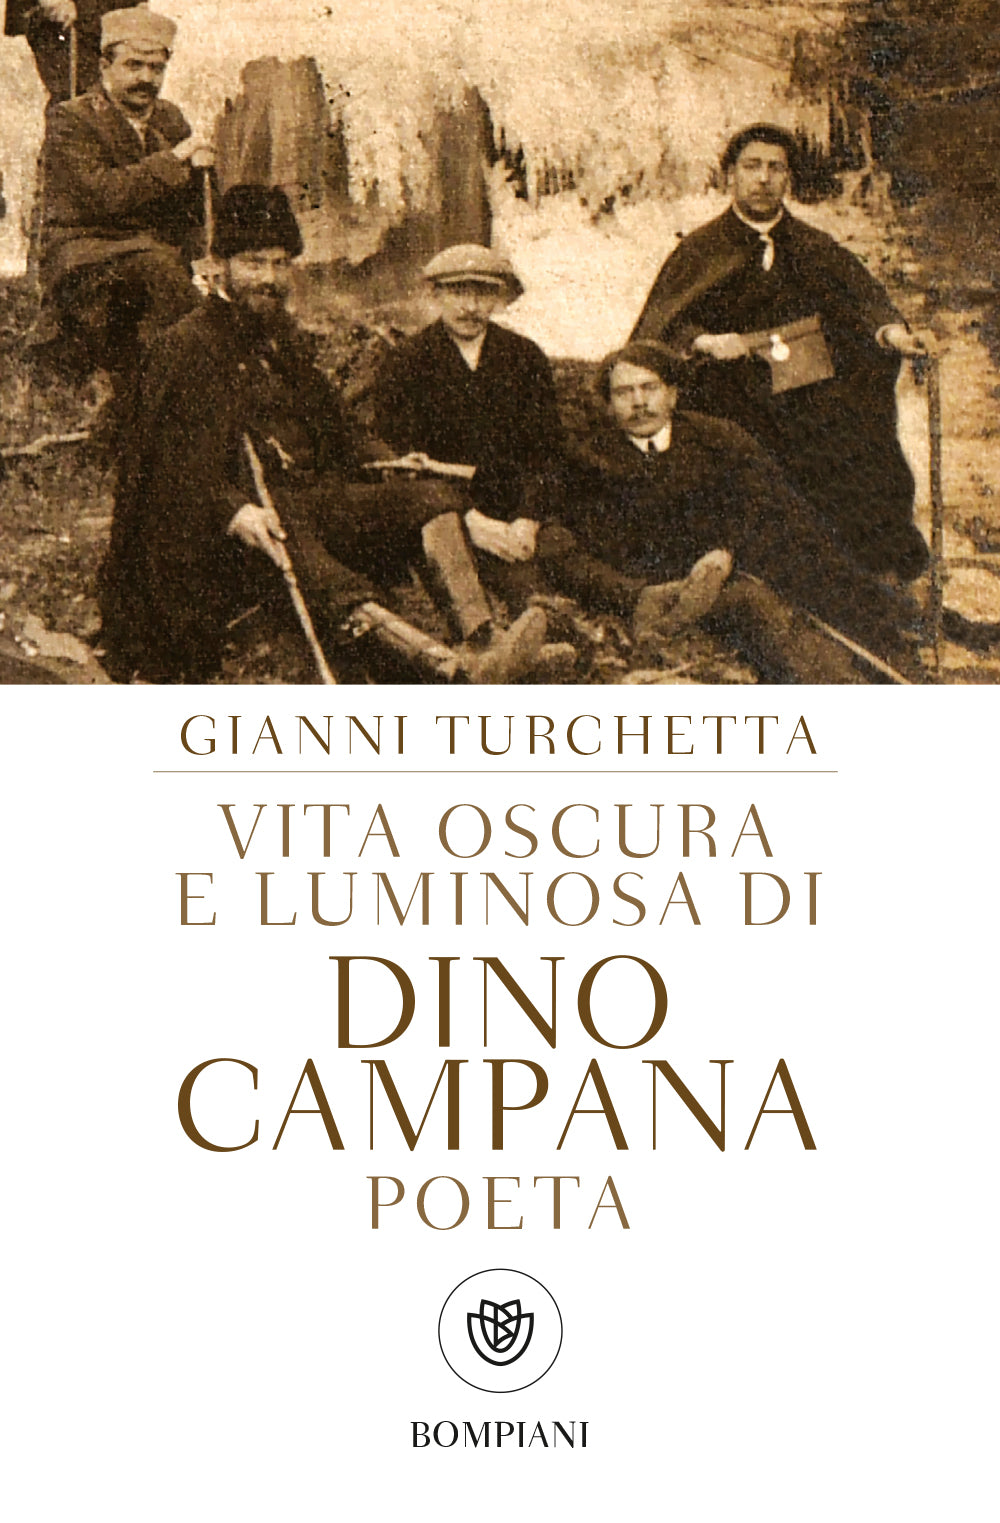 Vita oscura e luminosa di Dino Campana, poeta